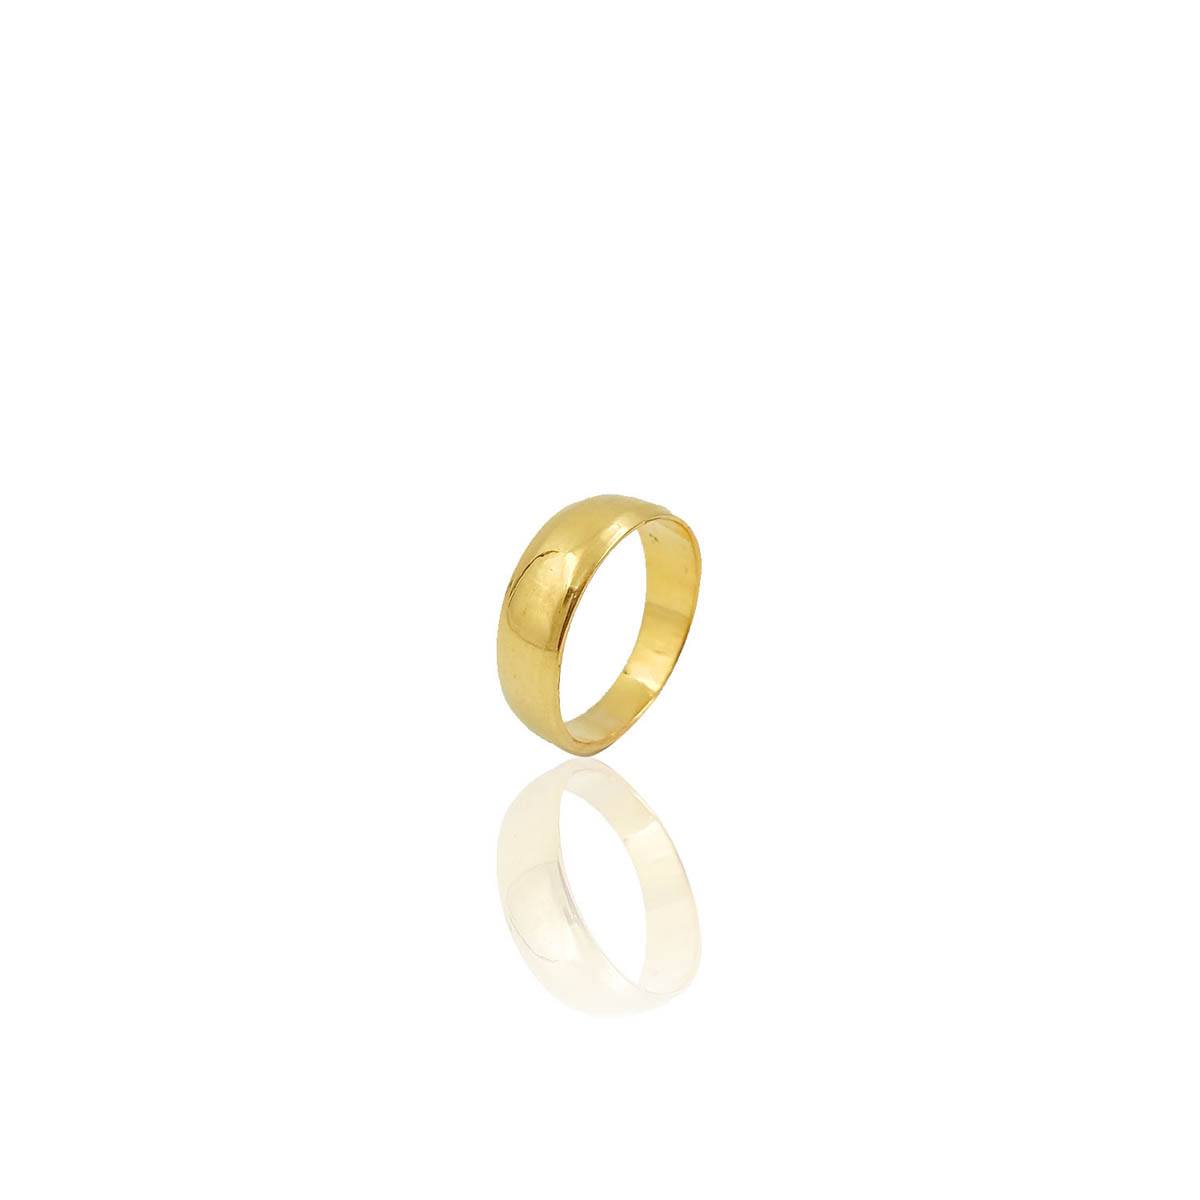 jewelry Pure gold ring design beautiful| Alibaba.com